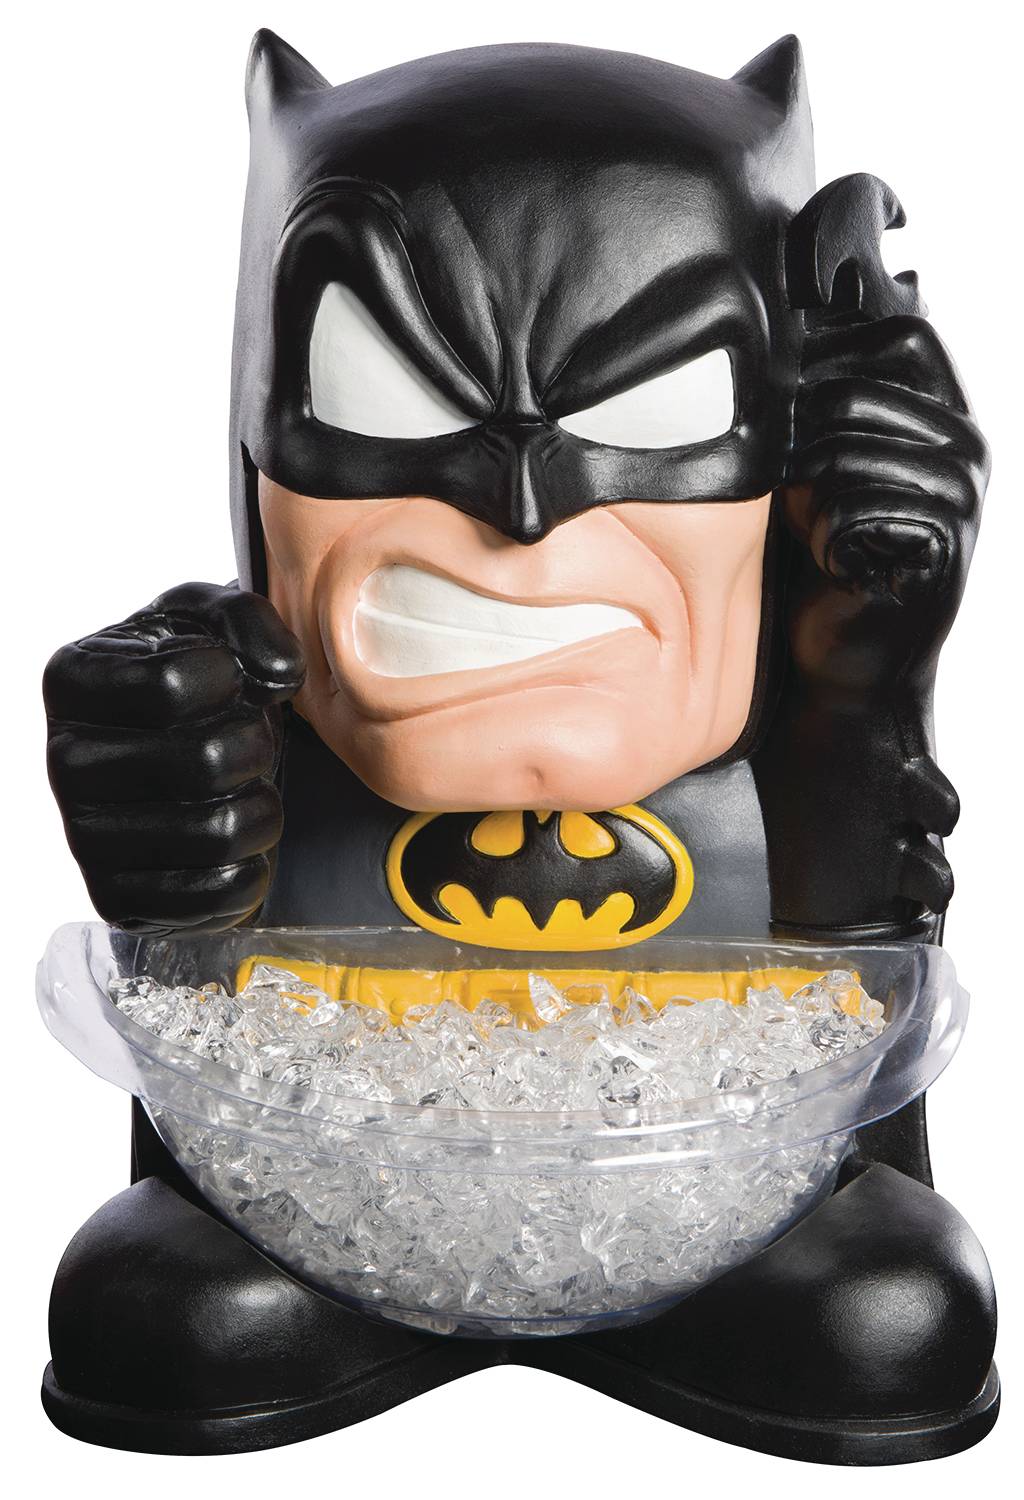 DC Heroes Batman Candy Bowl Holder